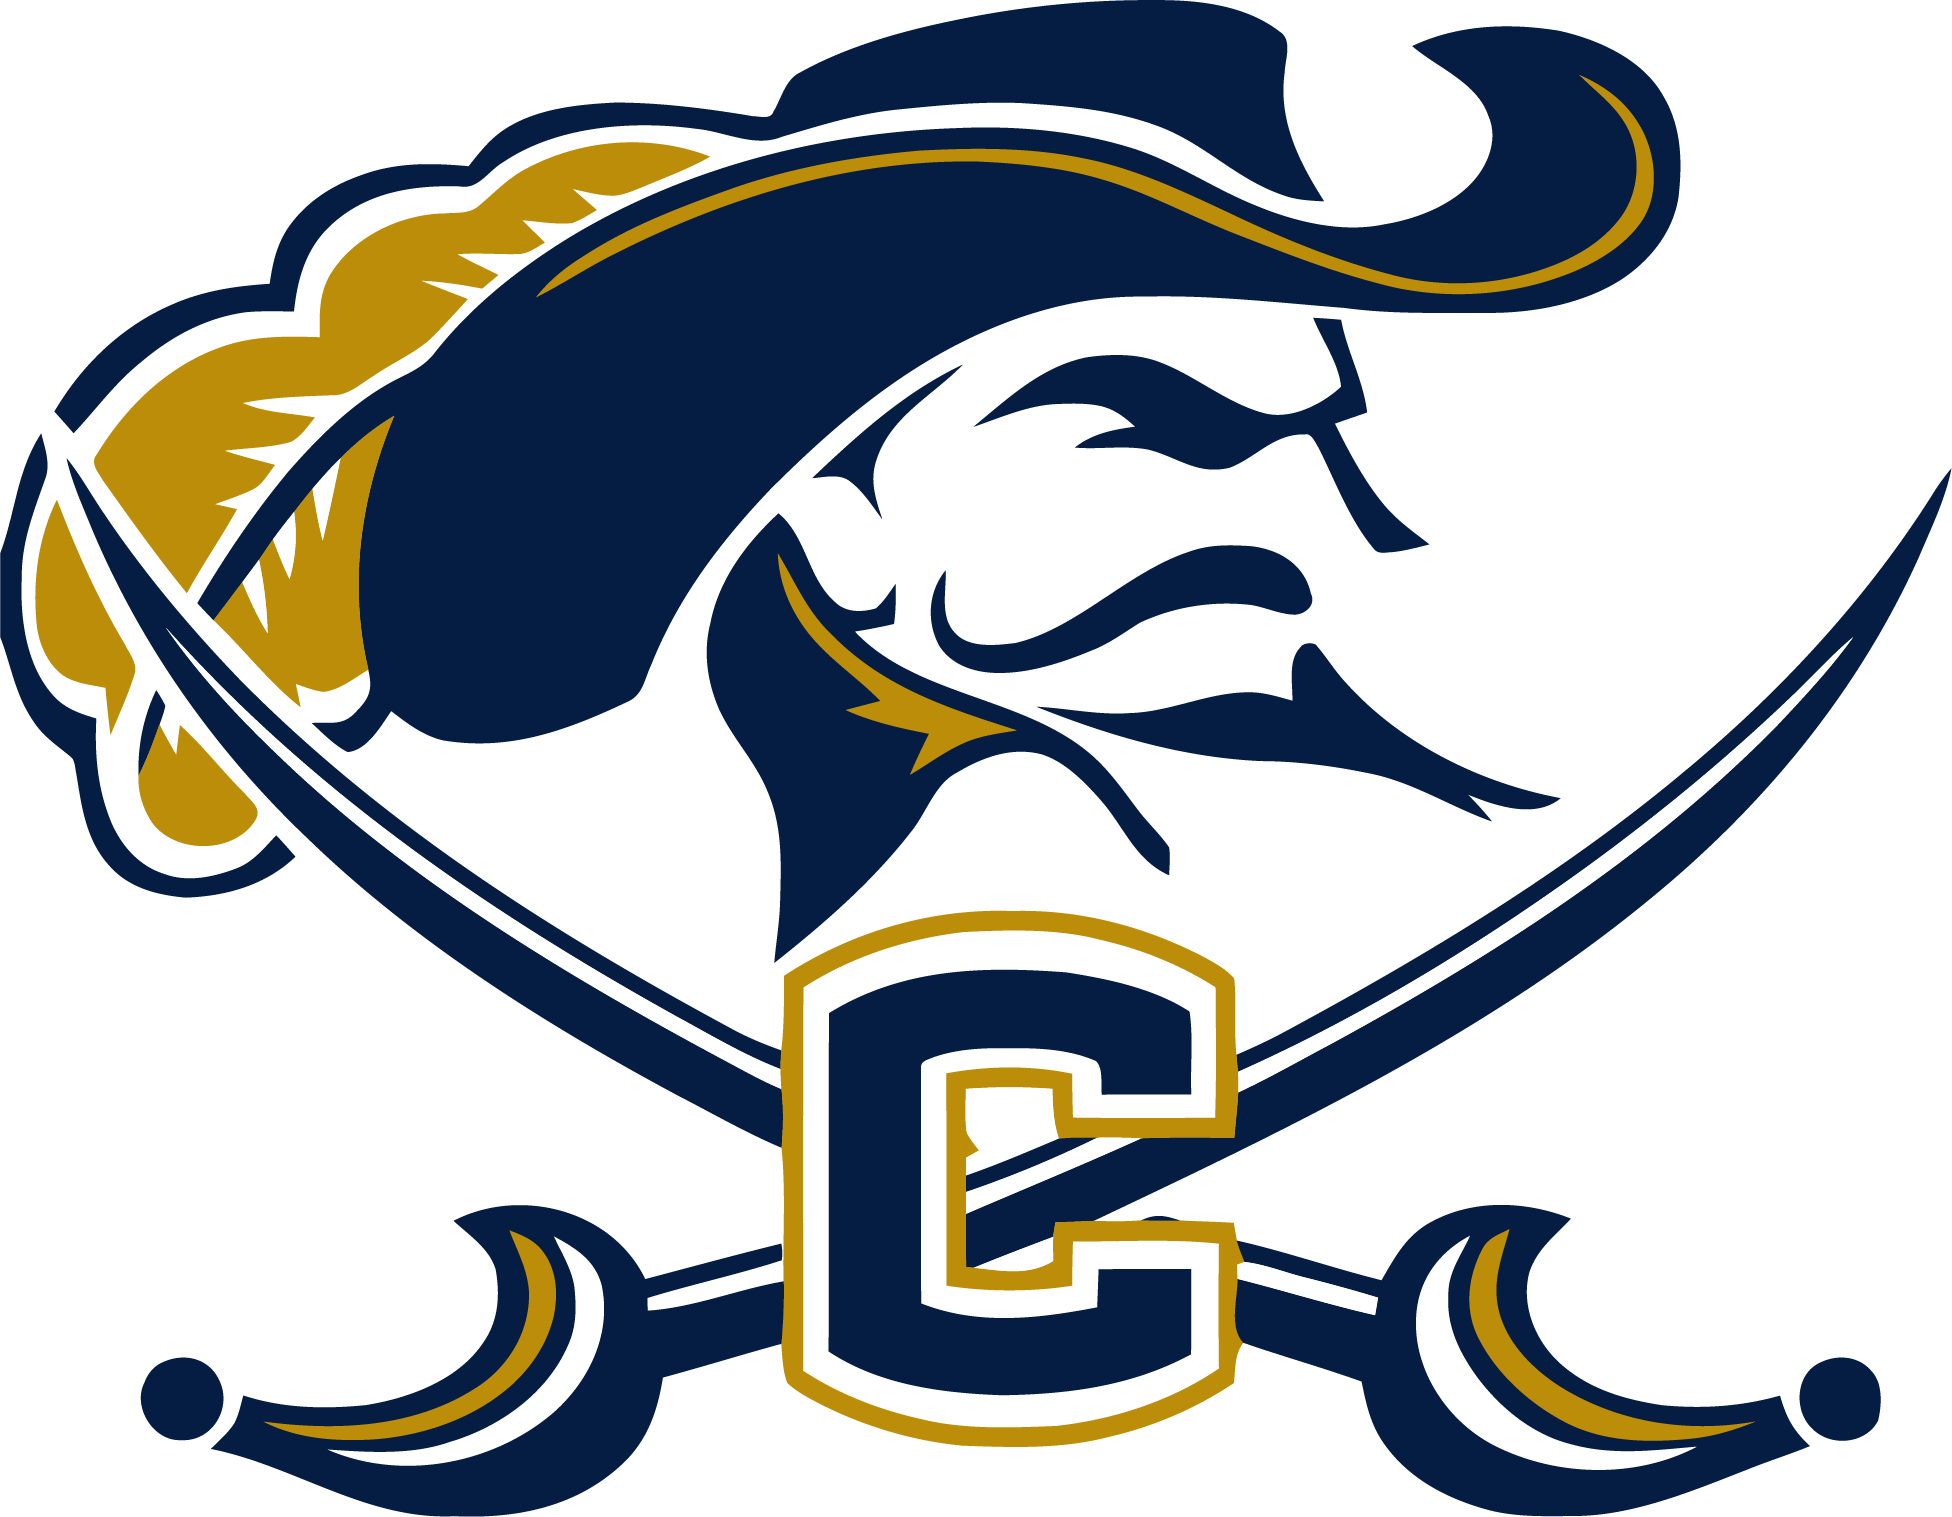 Hugh M. Cummings High School logo